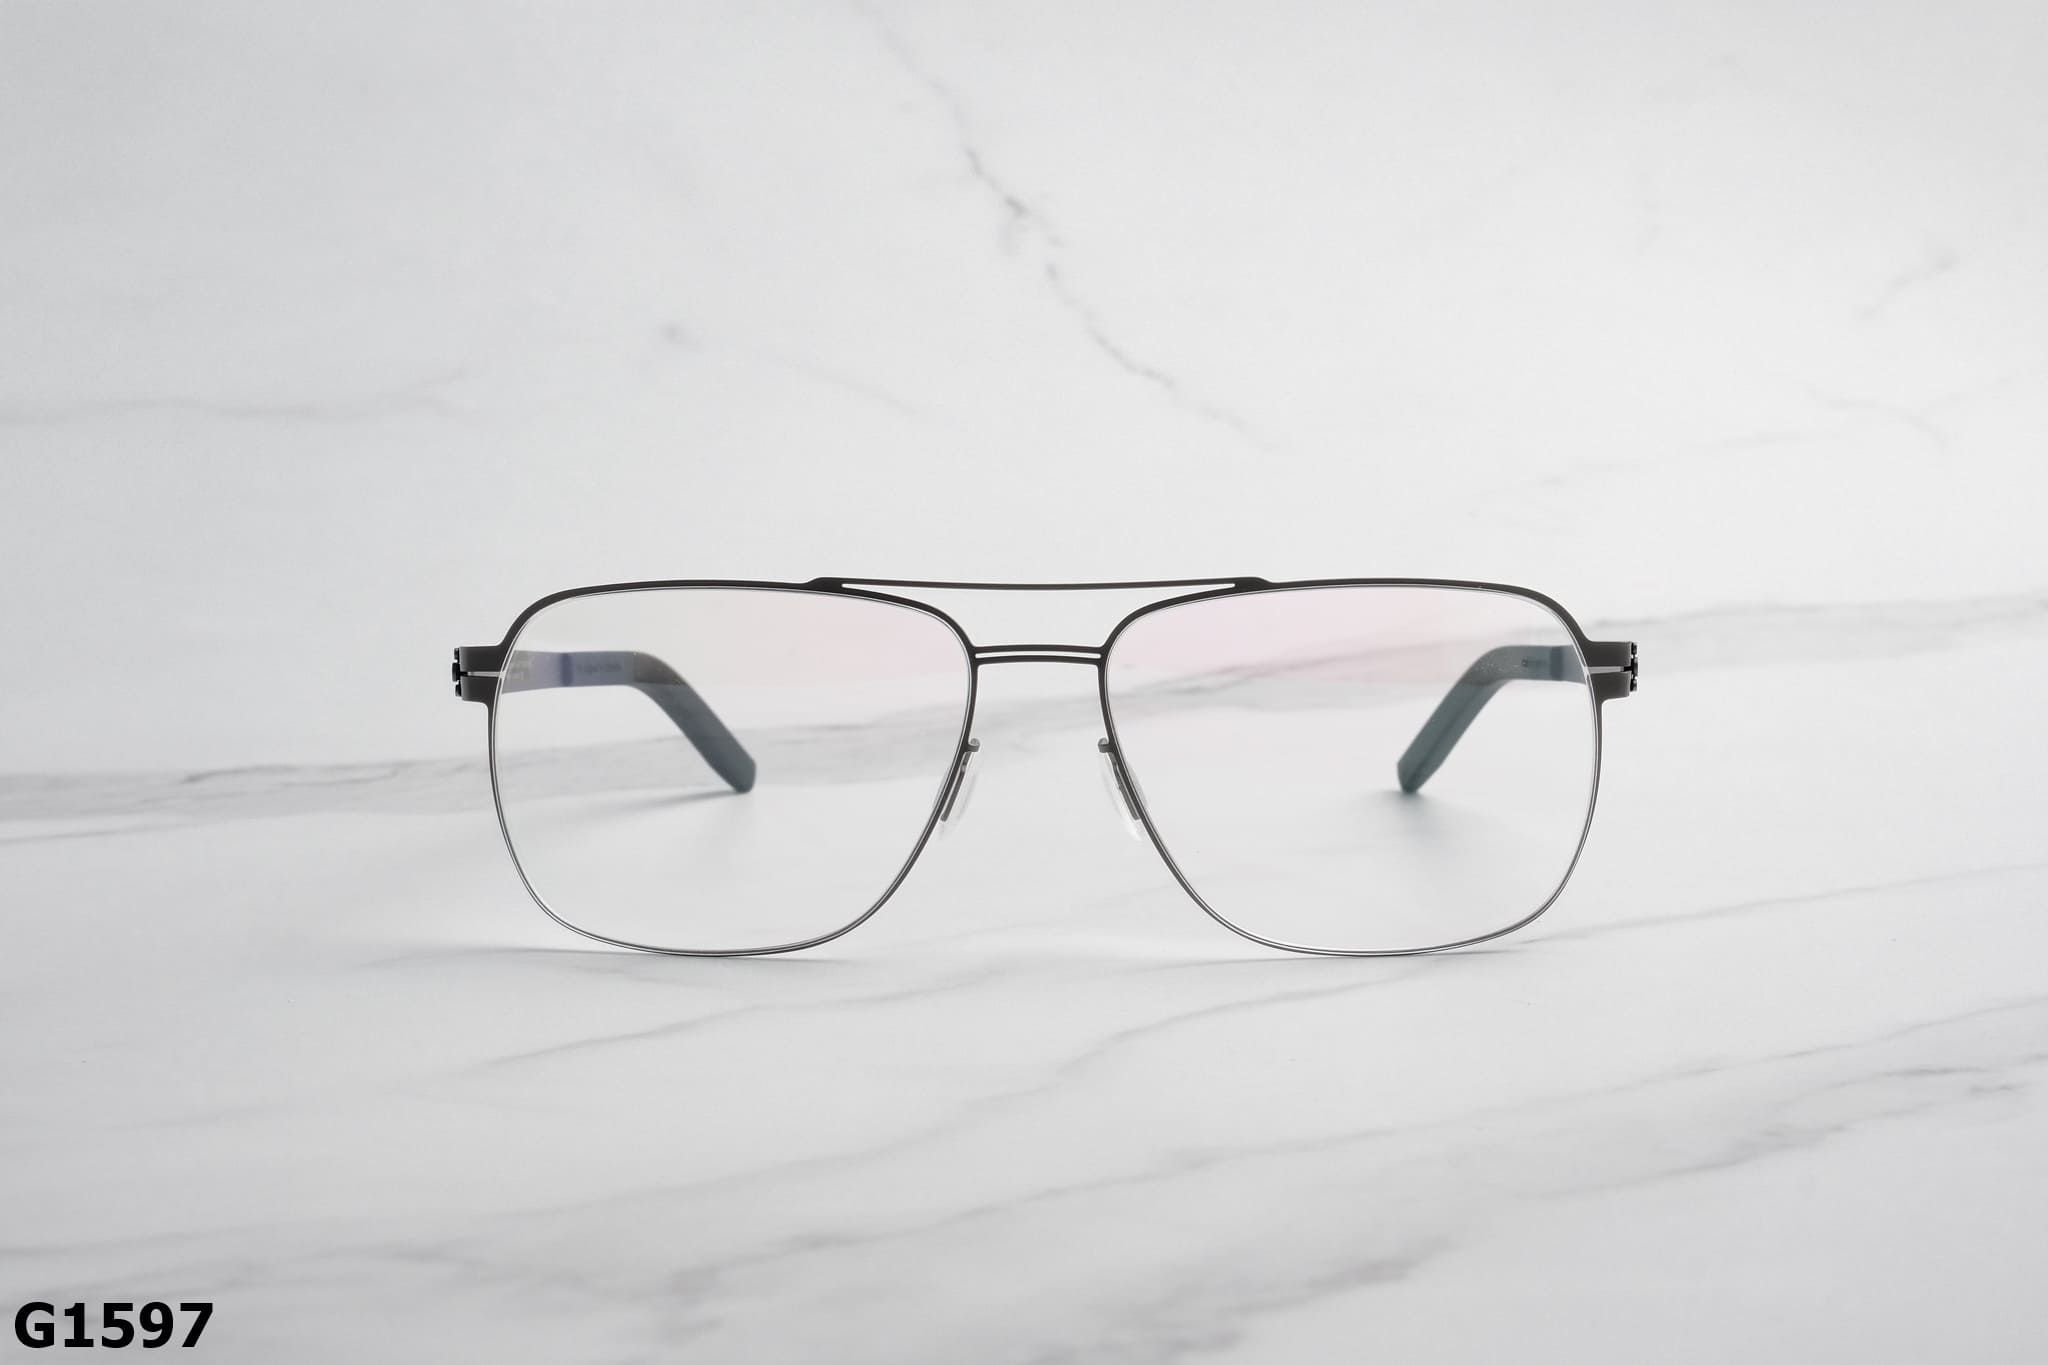  IC Eyewear - Glasses - G1597 